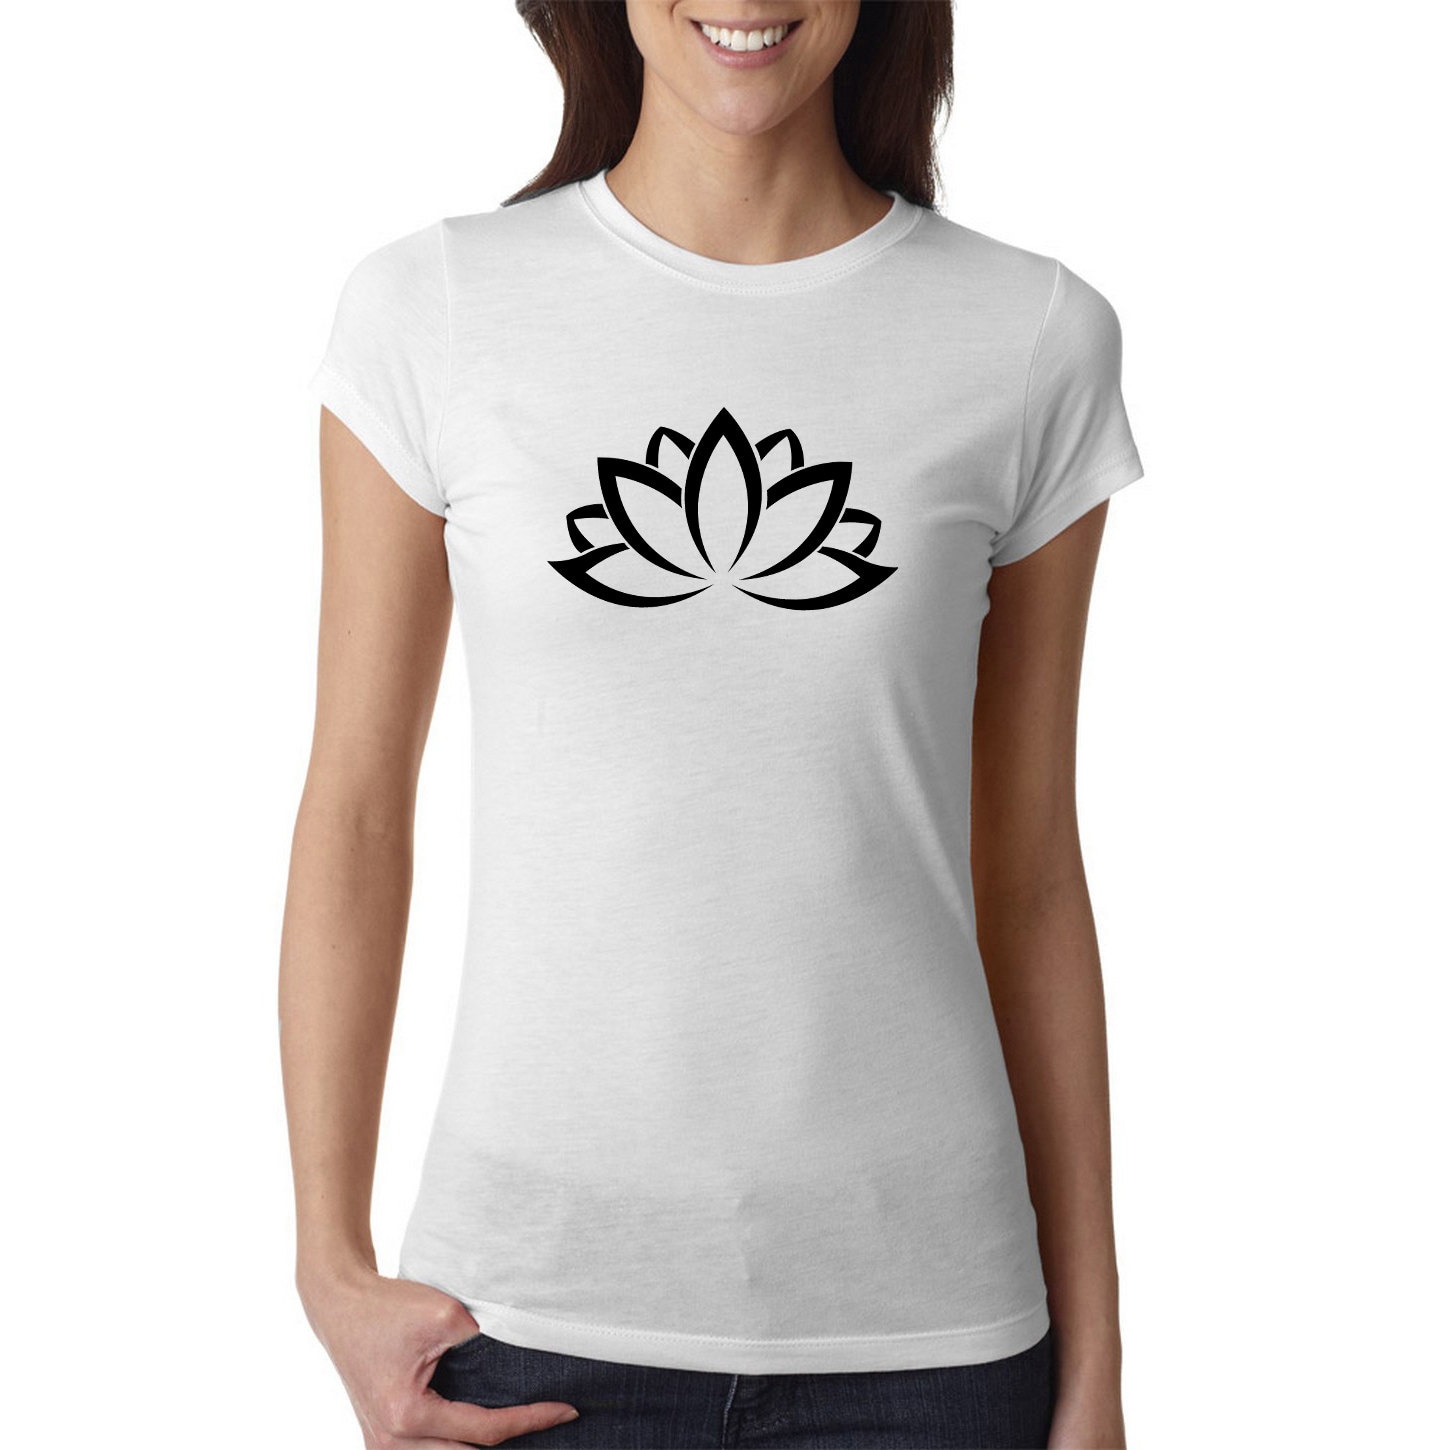 Meditation Shirt Lotus Flower Shirt Yoga Shirt Yoga Top